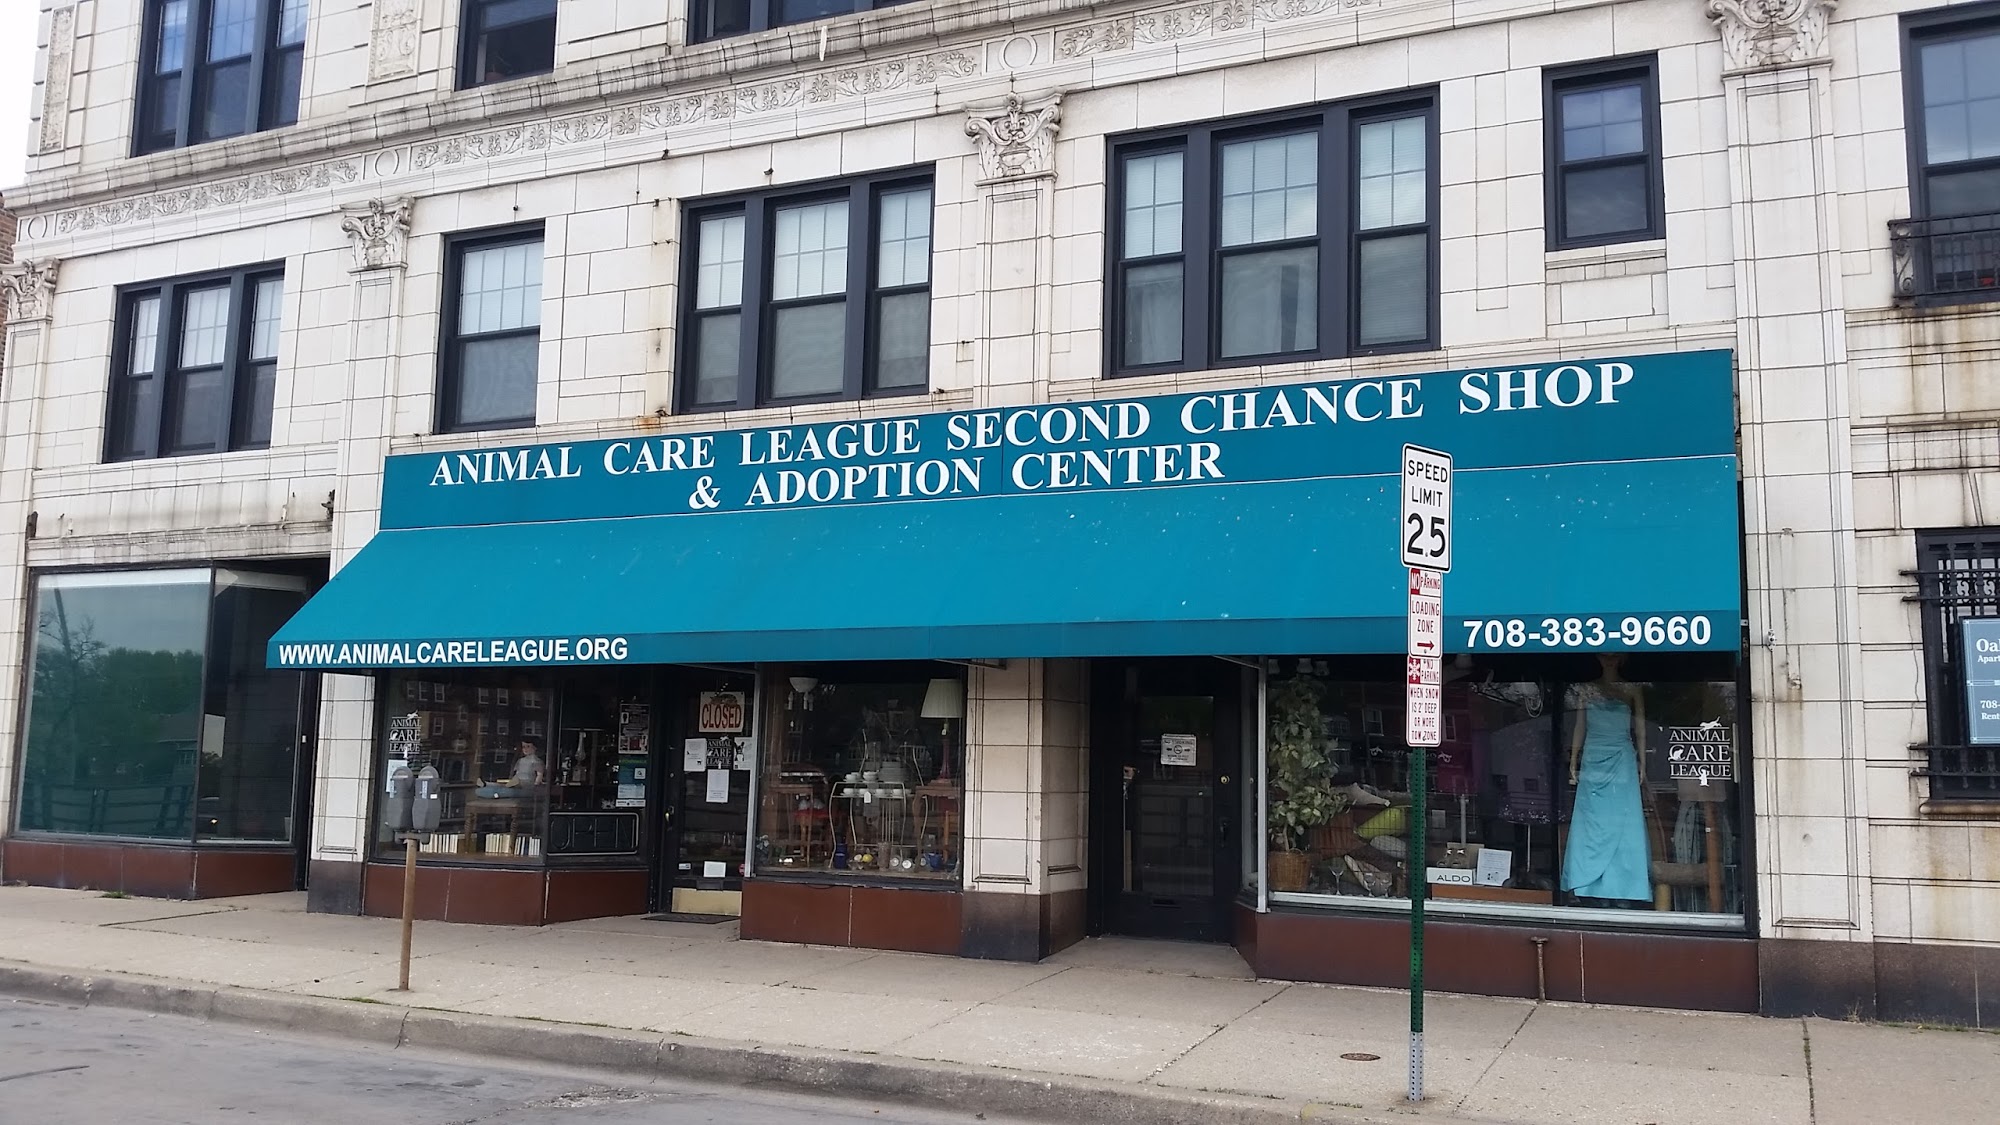 Animal Care League 2nd Chance Shop